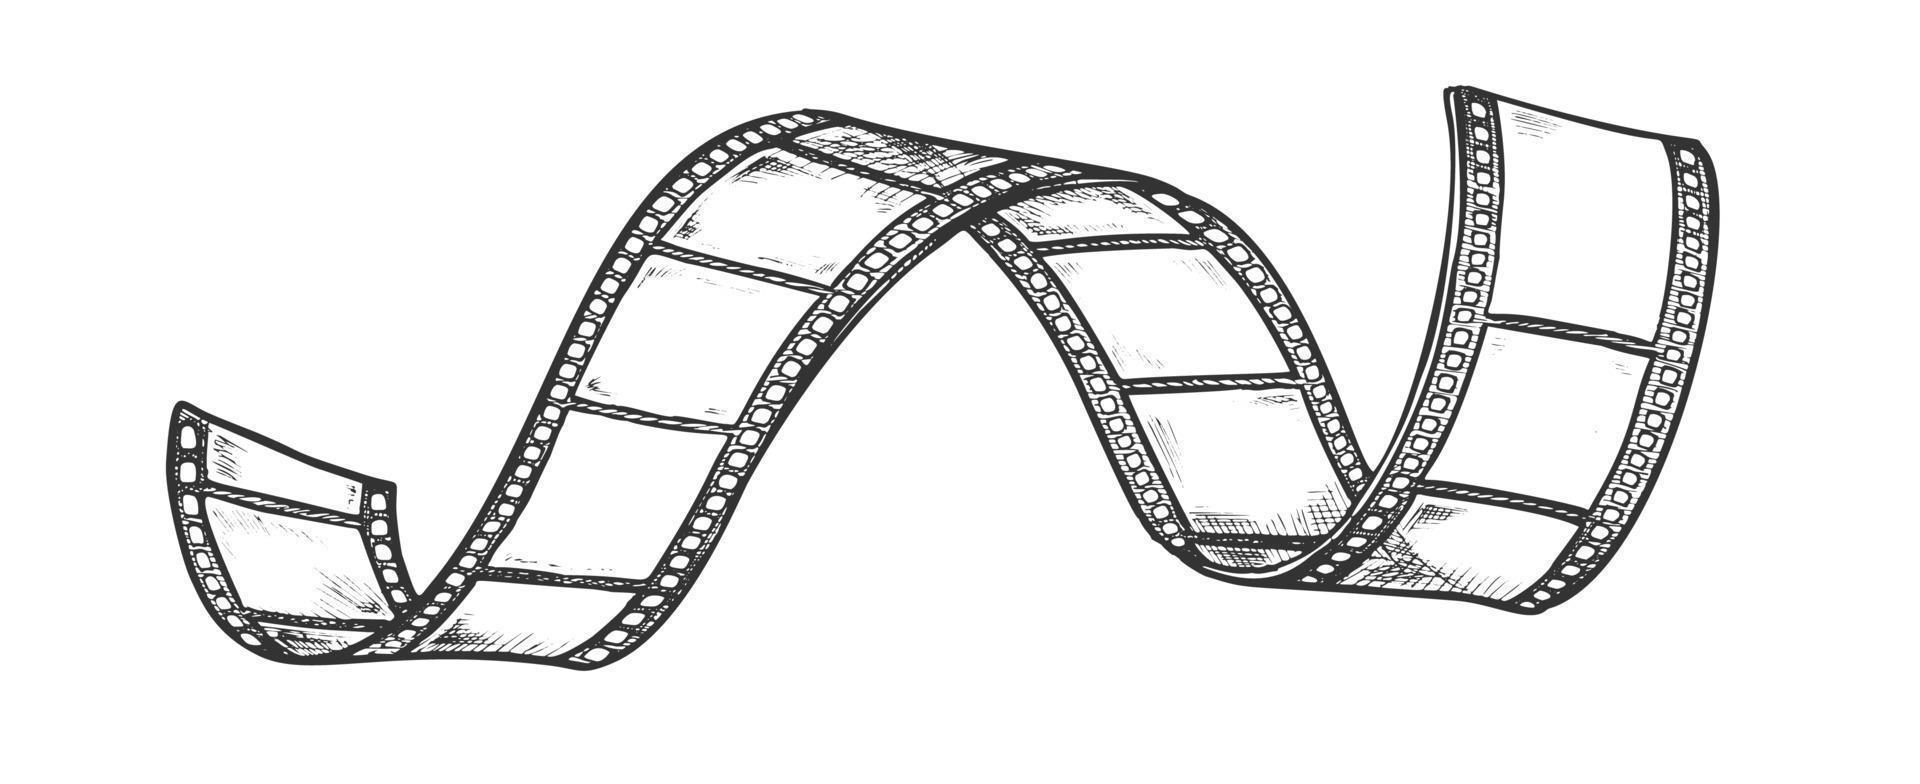 Filmstreifen für monochromen Vektor des Kinoprojektors